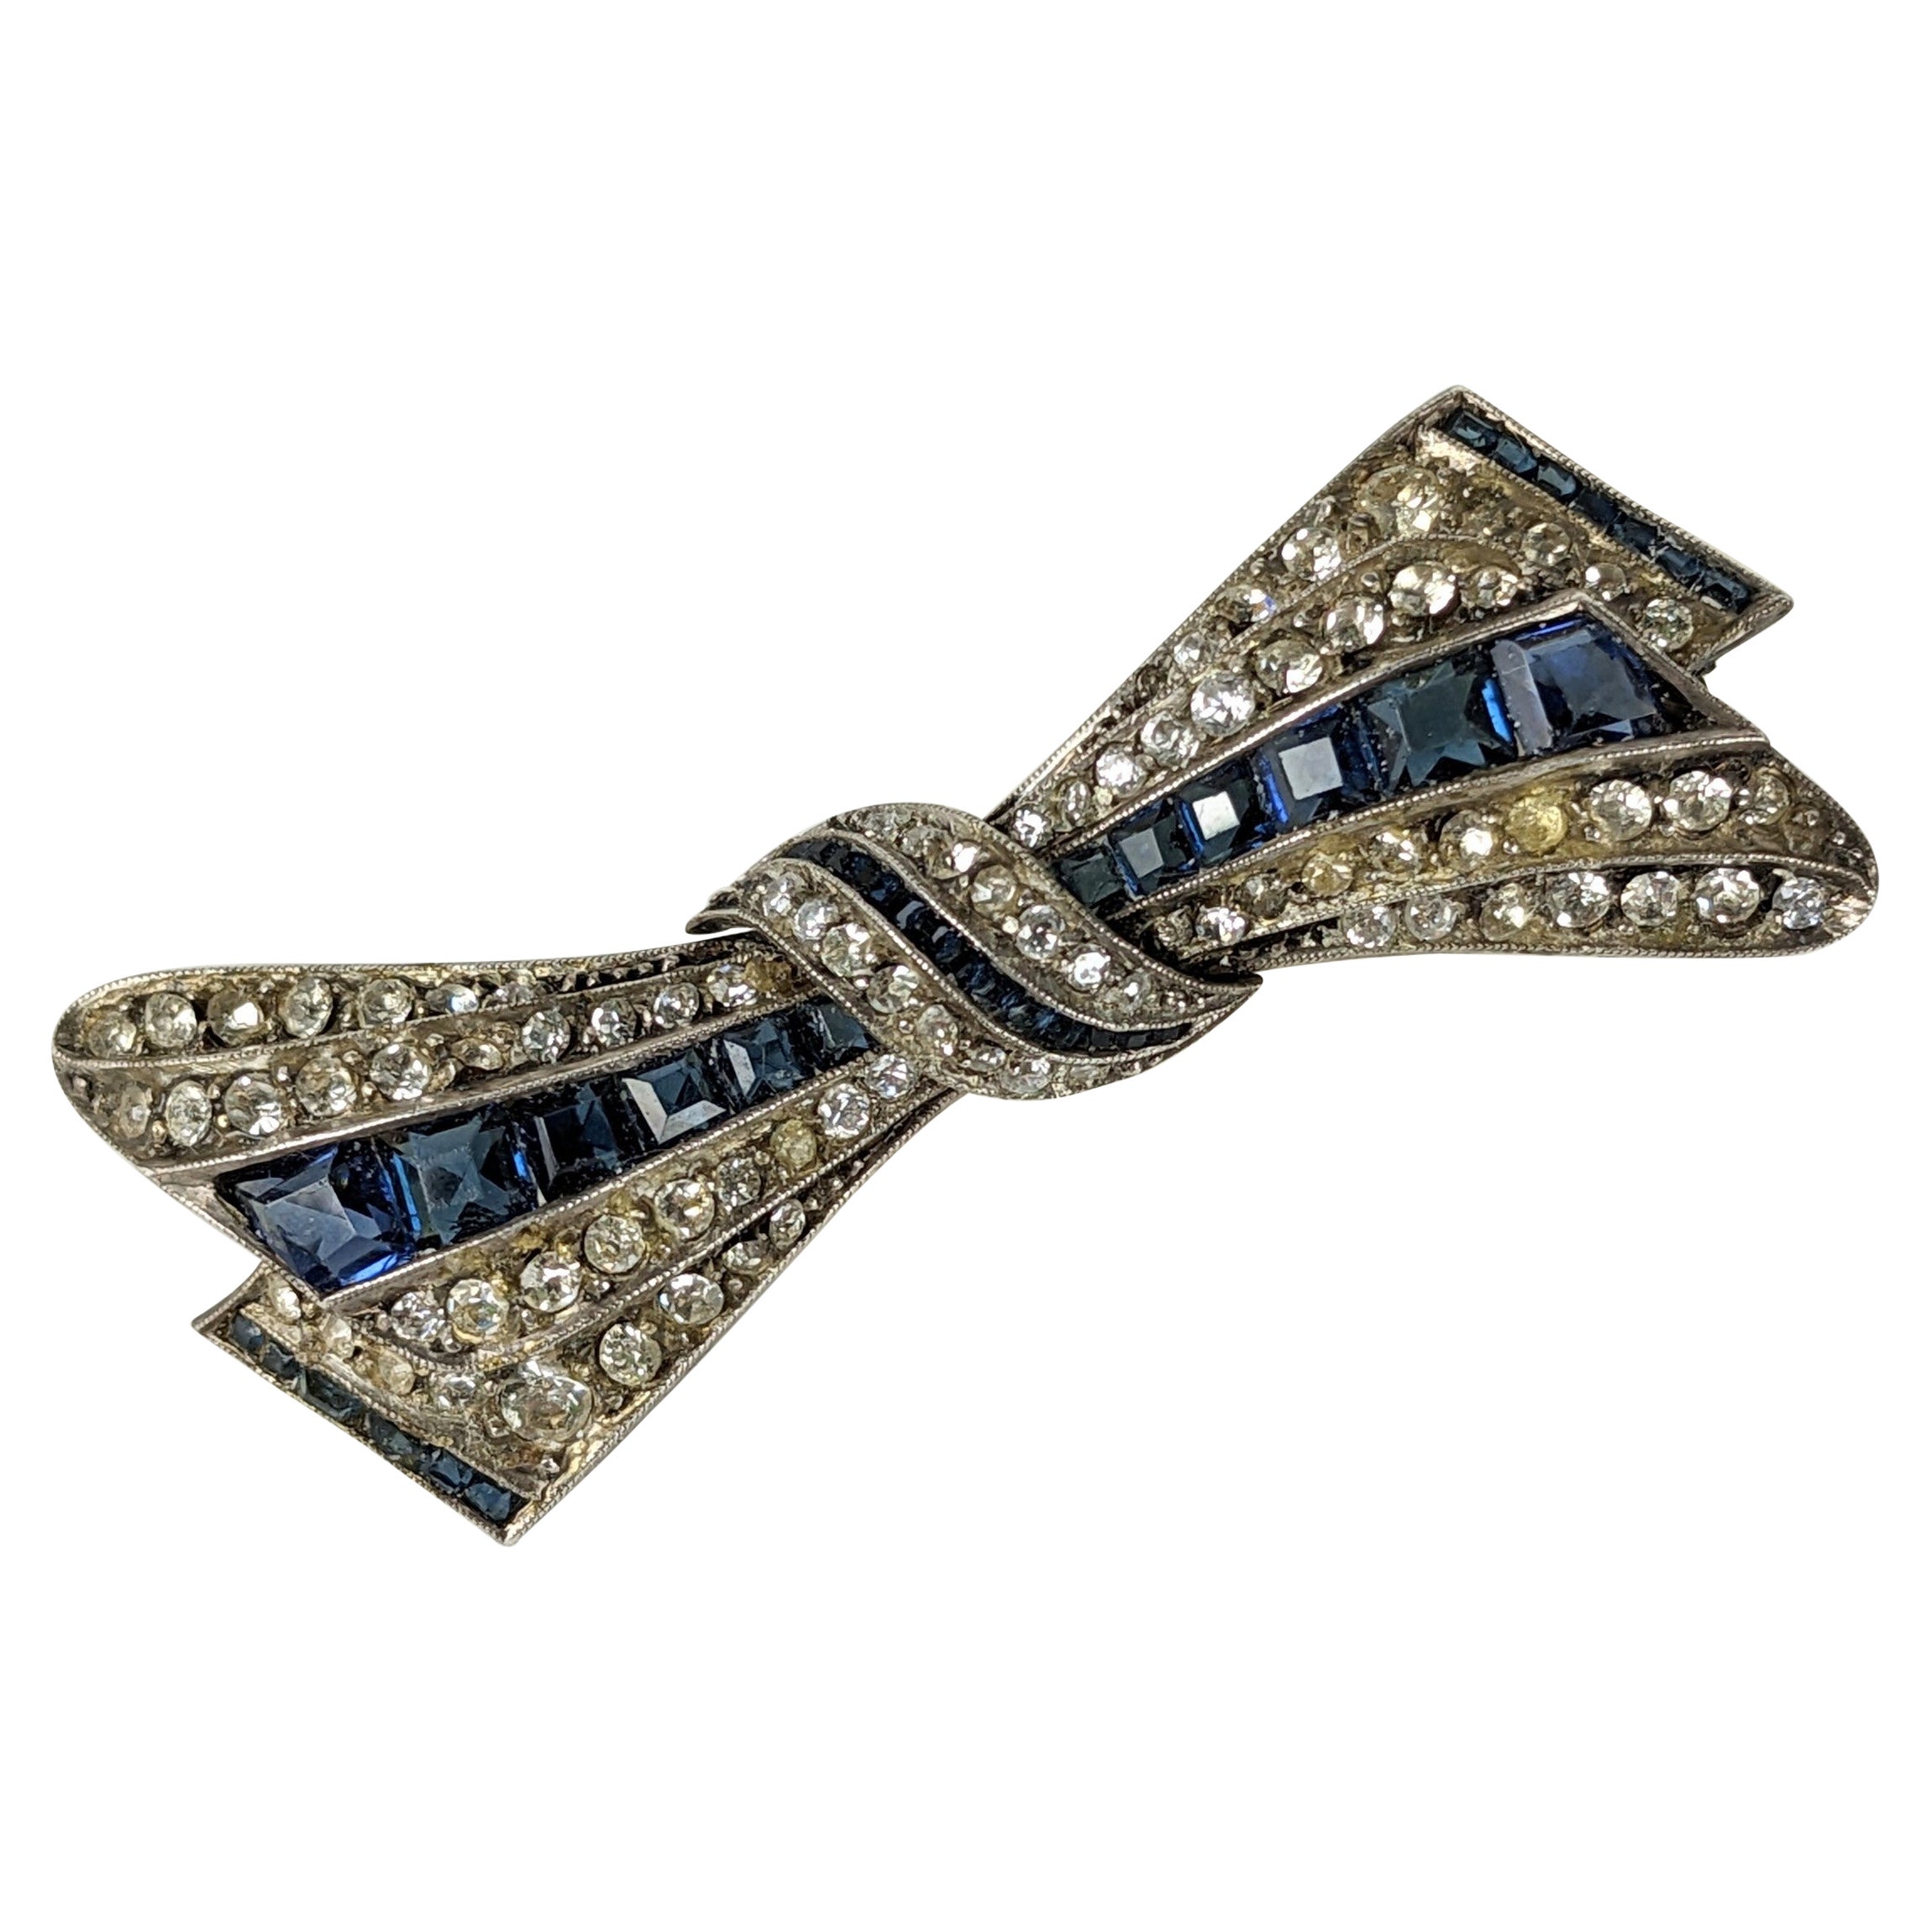 Elegant Art Deco Paste Sapphire Bow